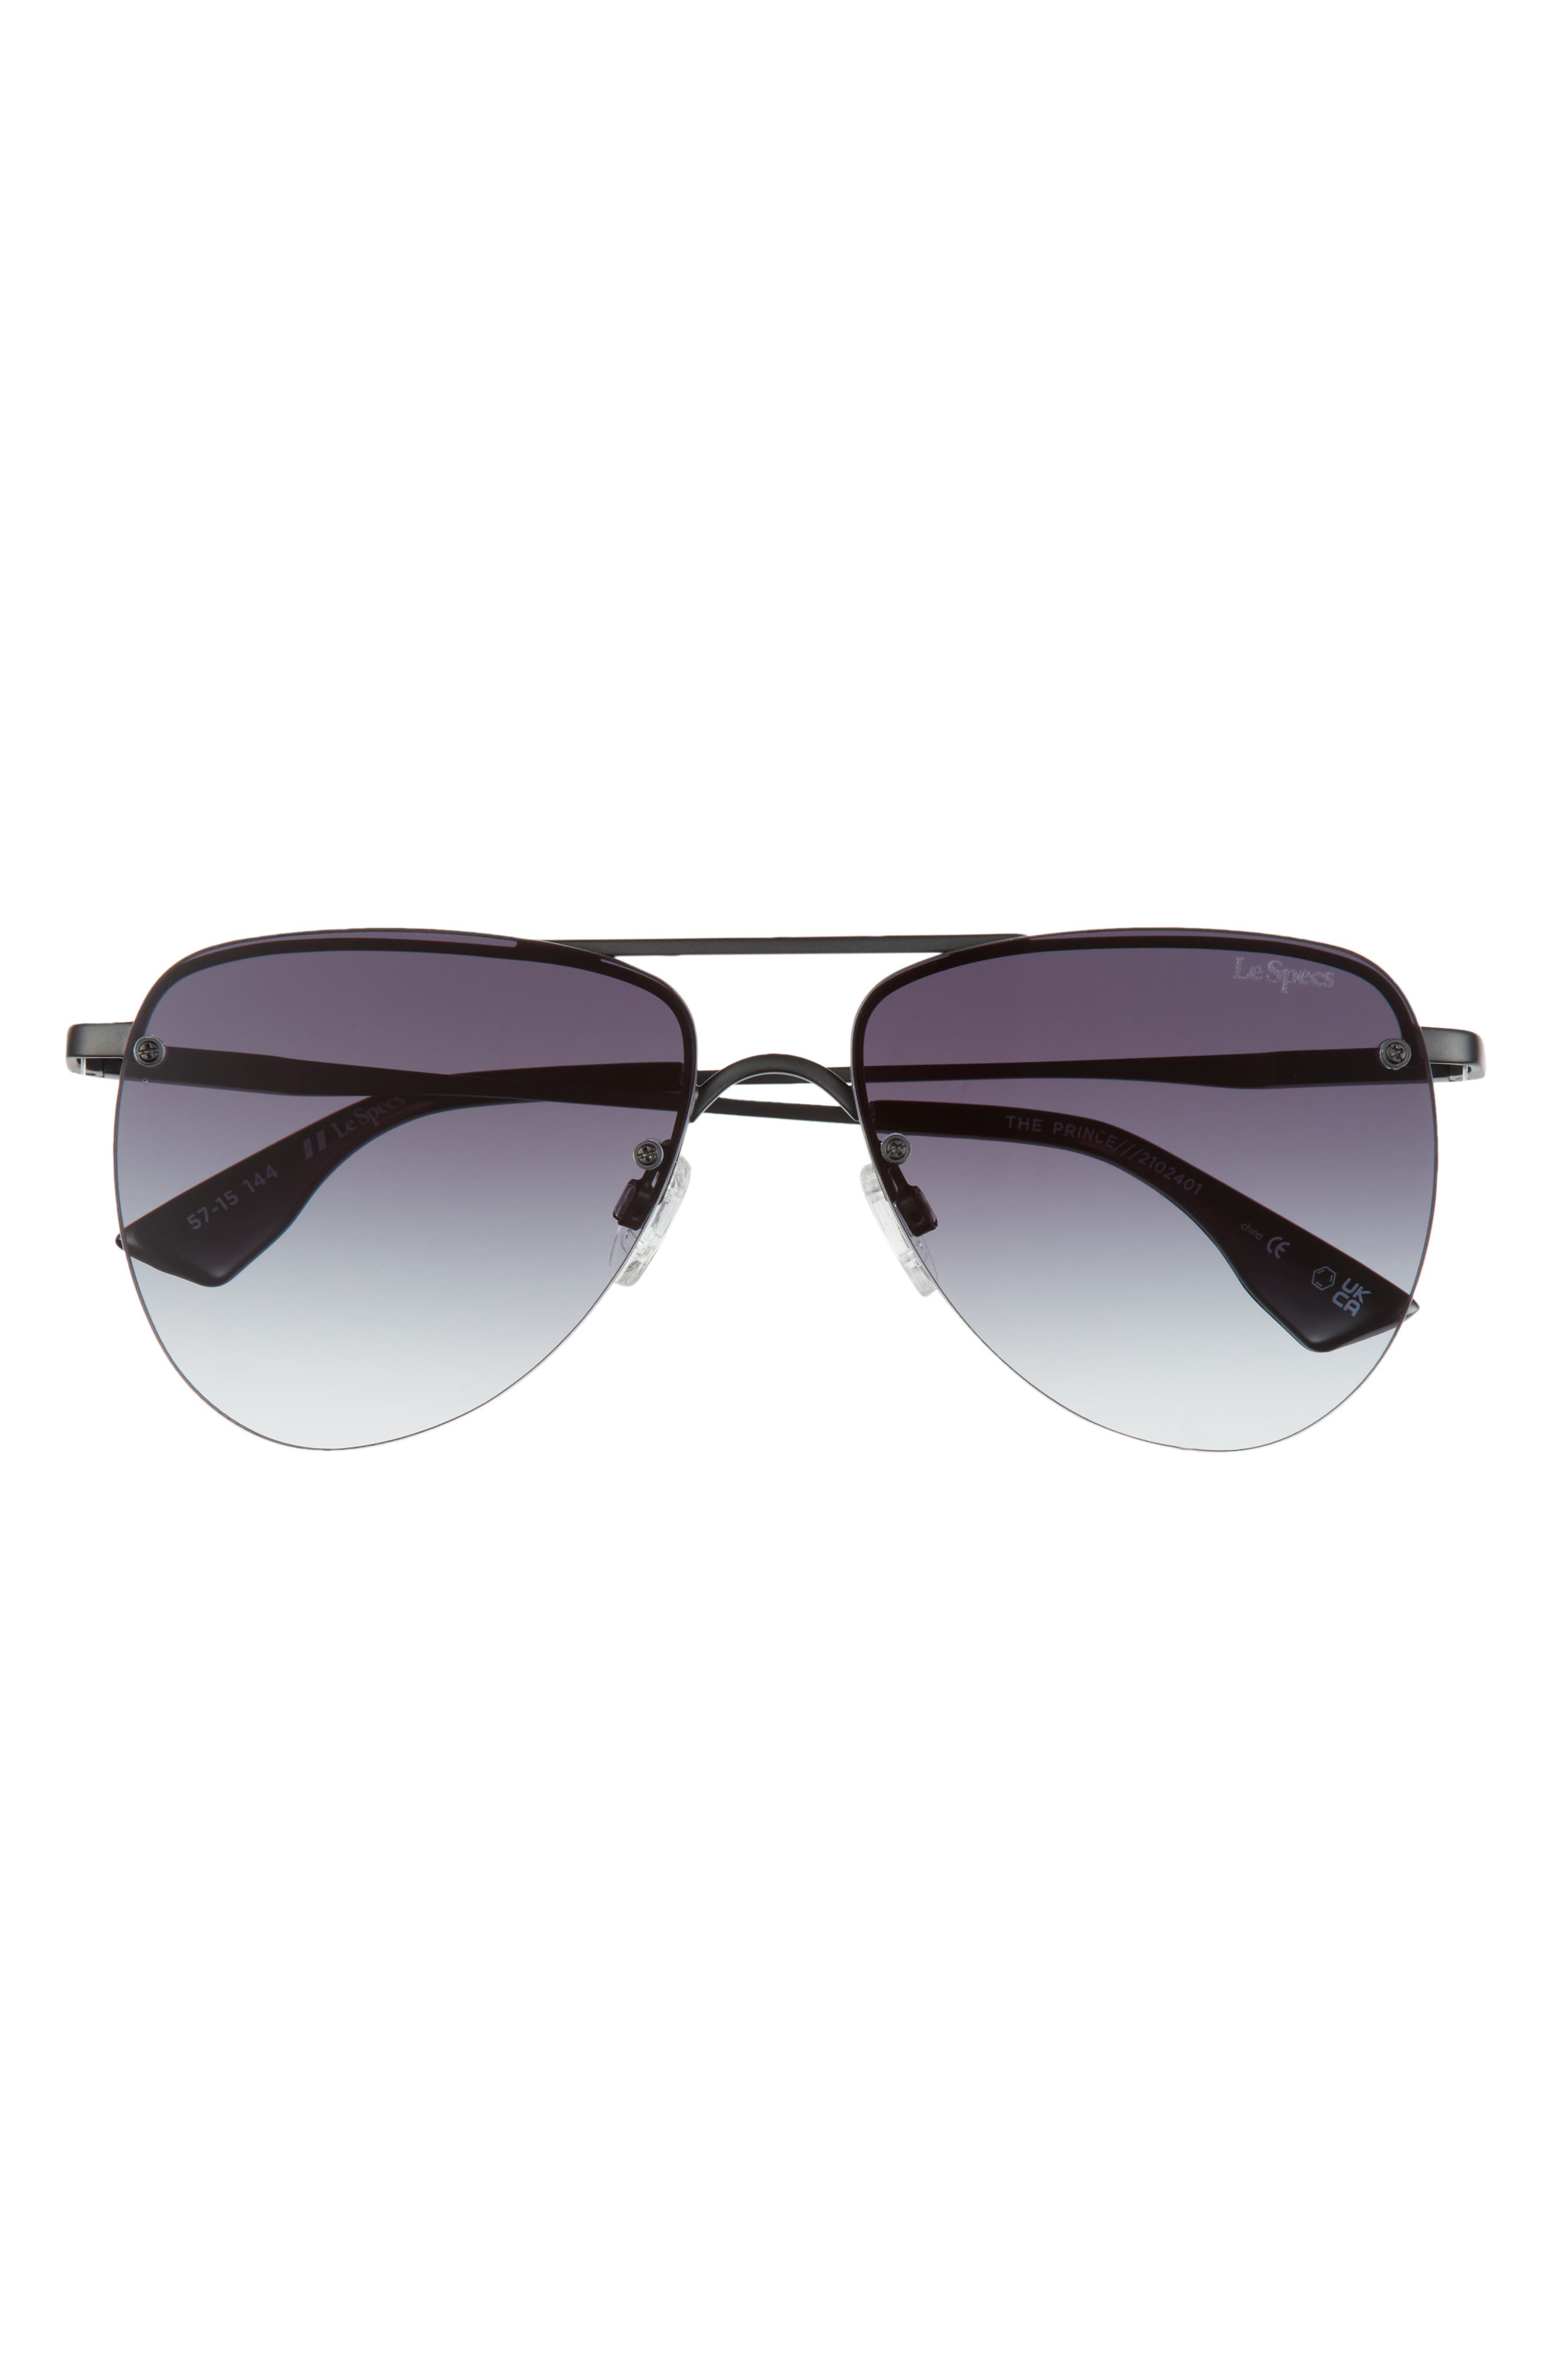 Le Specs The Prince 57mm Aviator Sunglasses in Matte Black/Cool Smoke Grad at Nordstrom